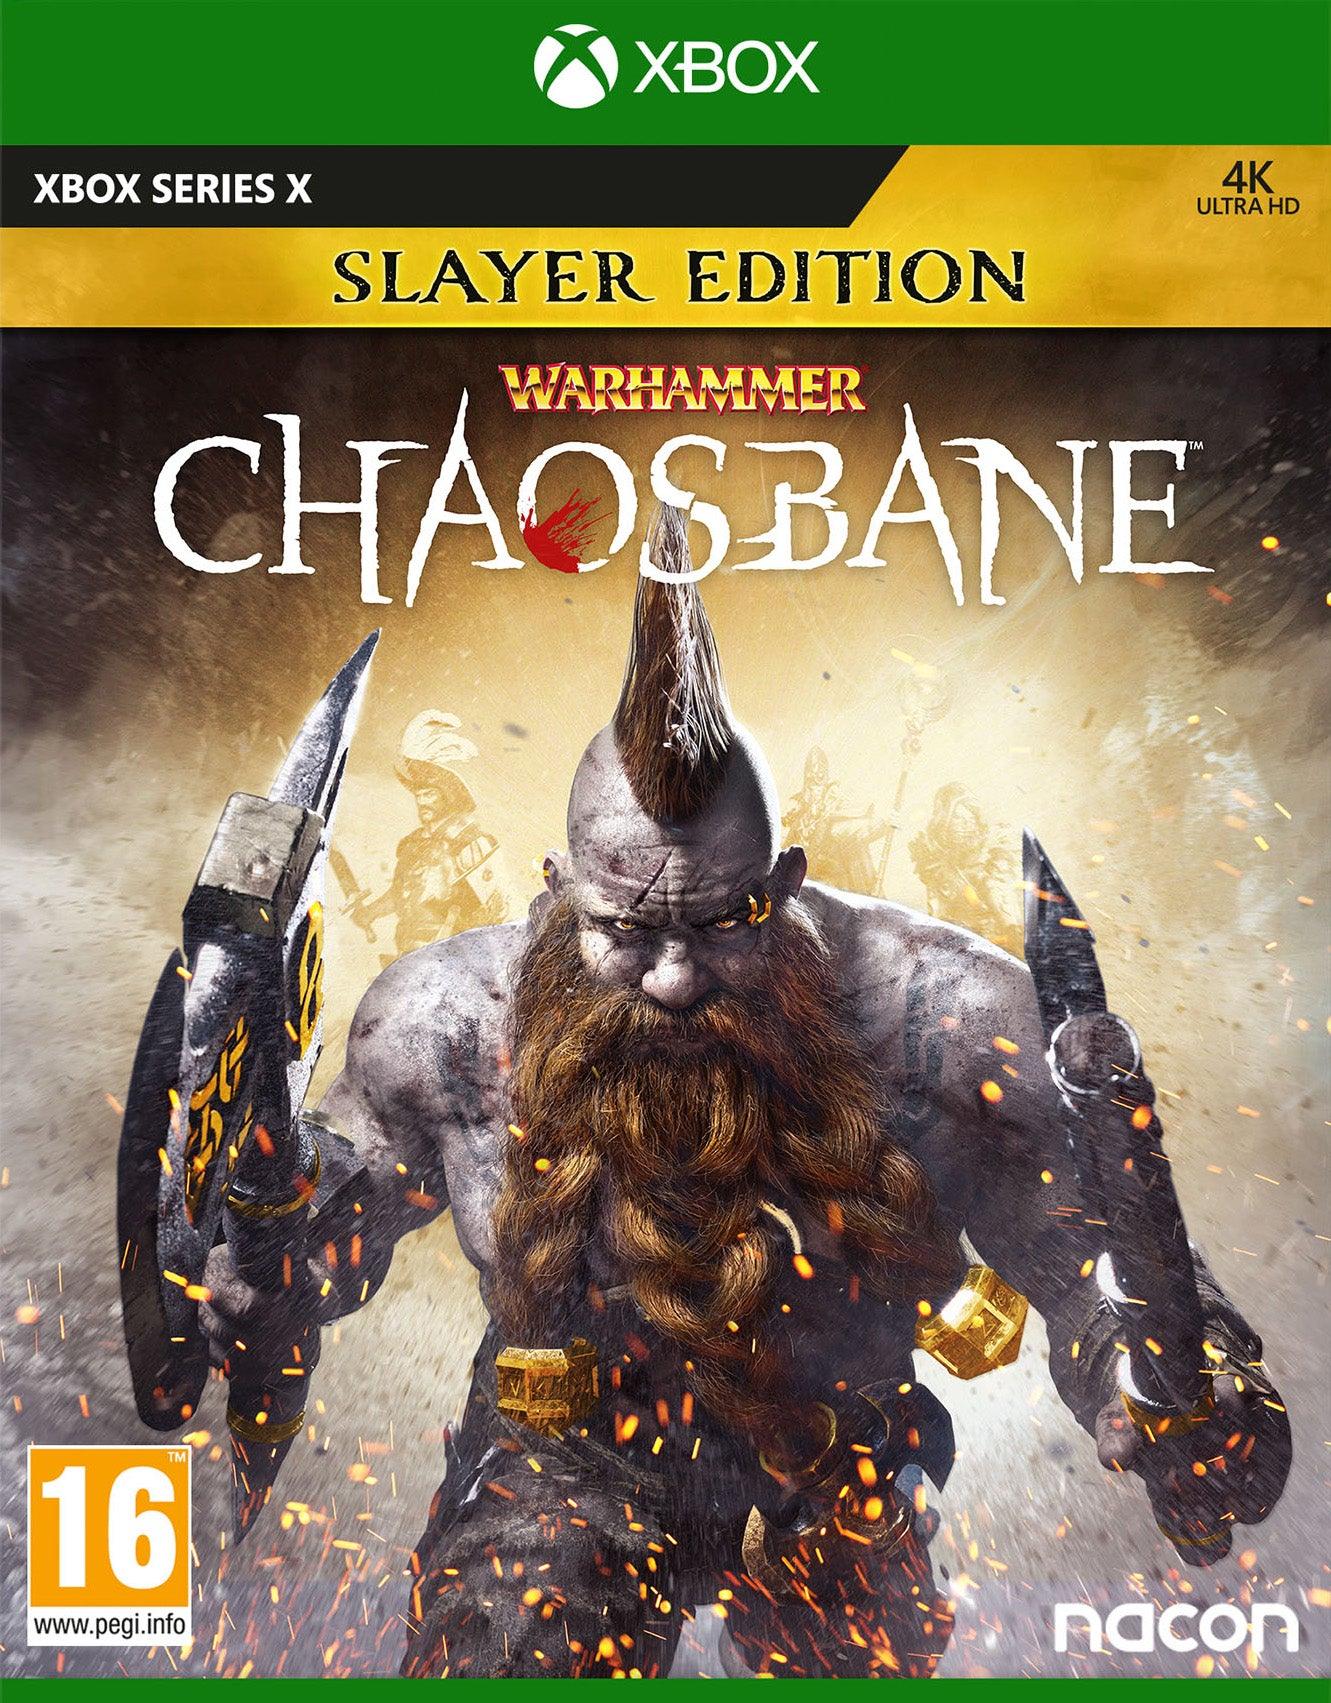 Warhammer Chaosbane Slayer Ed - Want a New Gadget